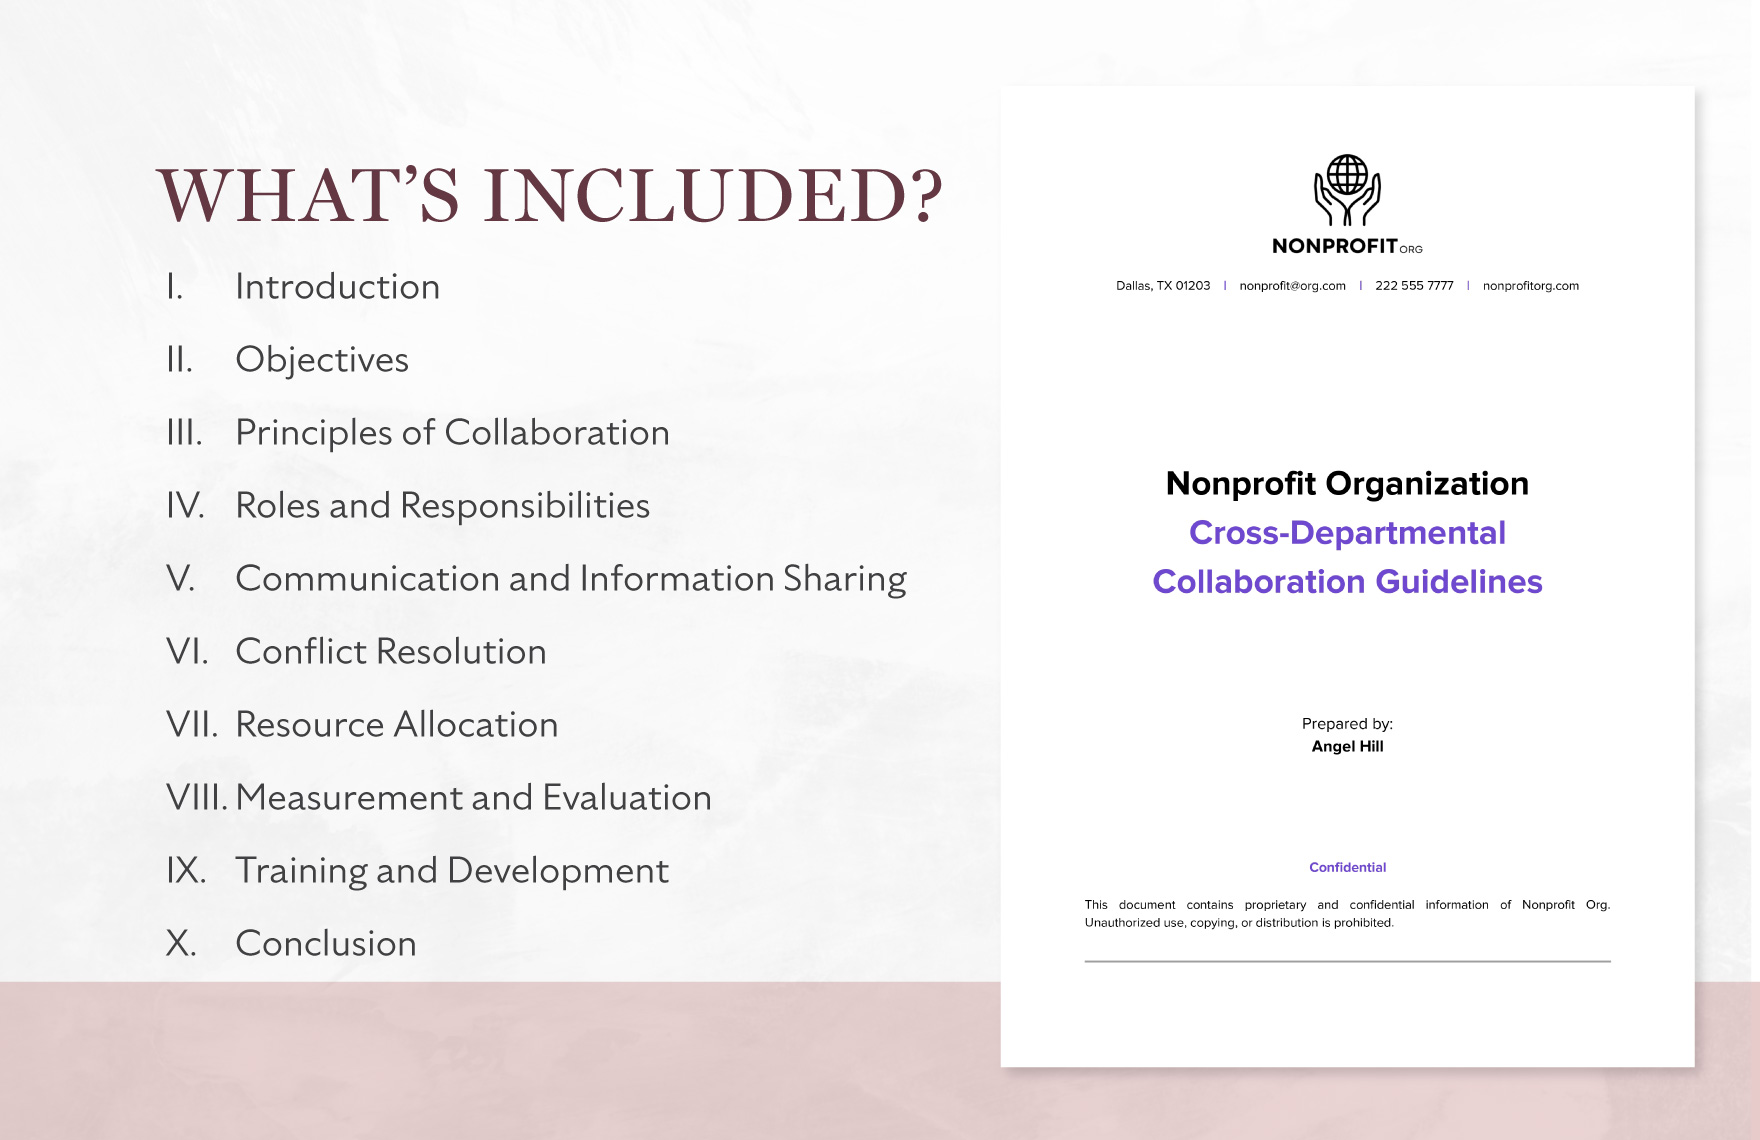 Nonprofit Organization Cross-Departmental Collaboration Guidelines Template